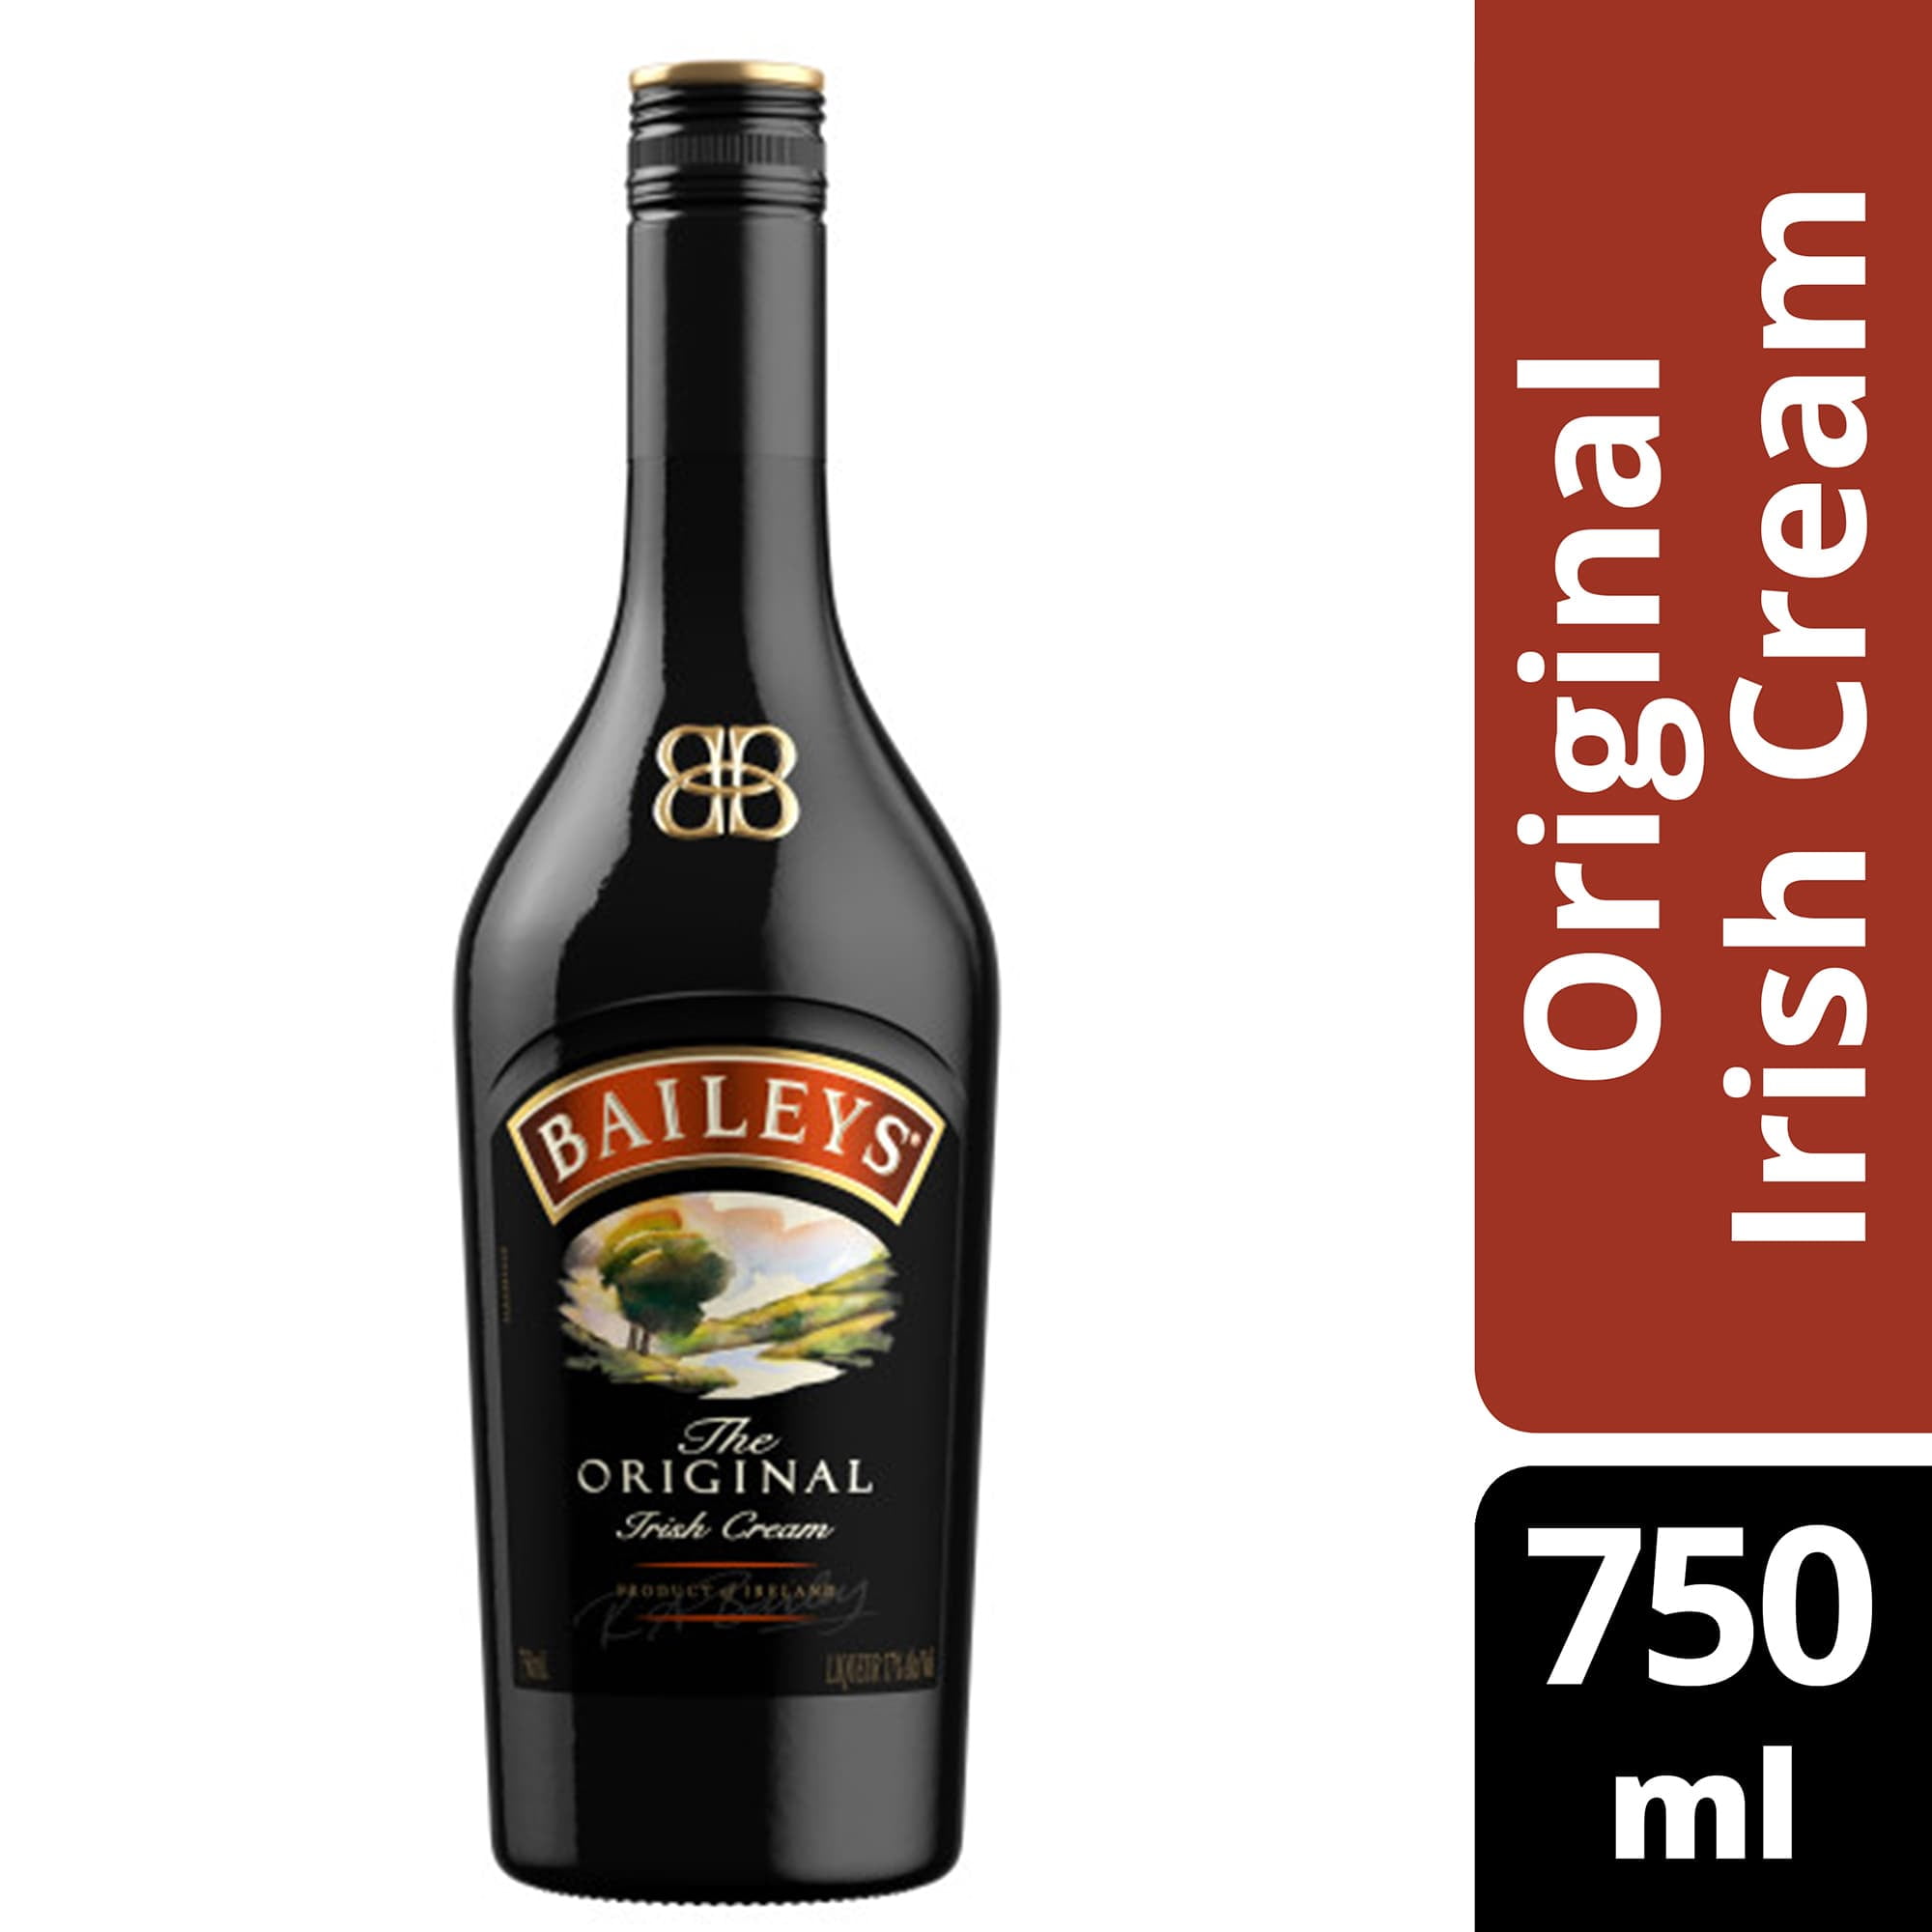 Original ABV 17% Cream Liqueur, Irish Baileys ml, 750